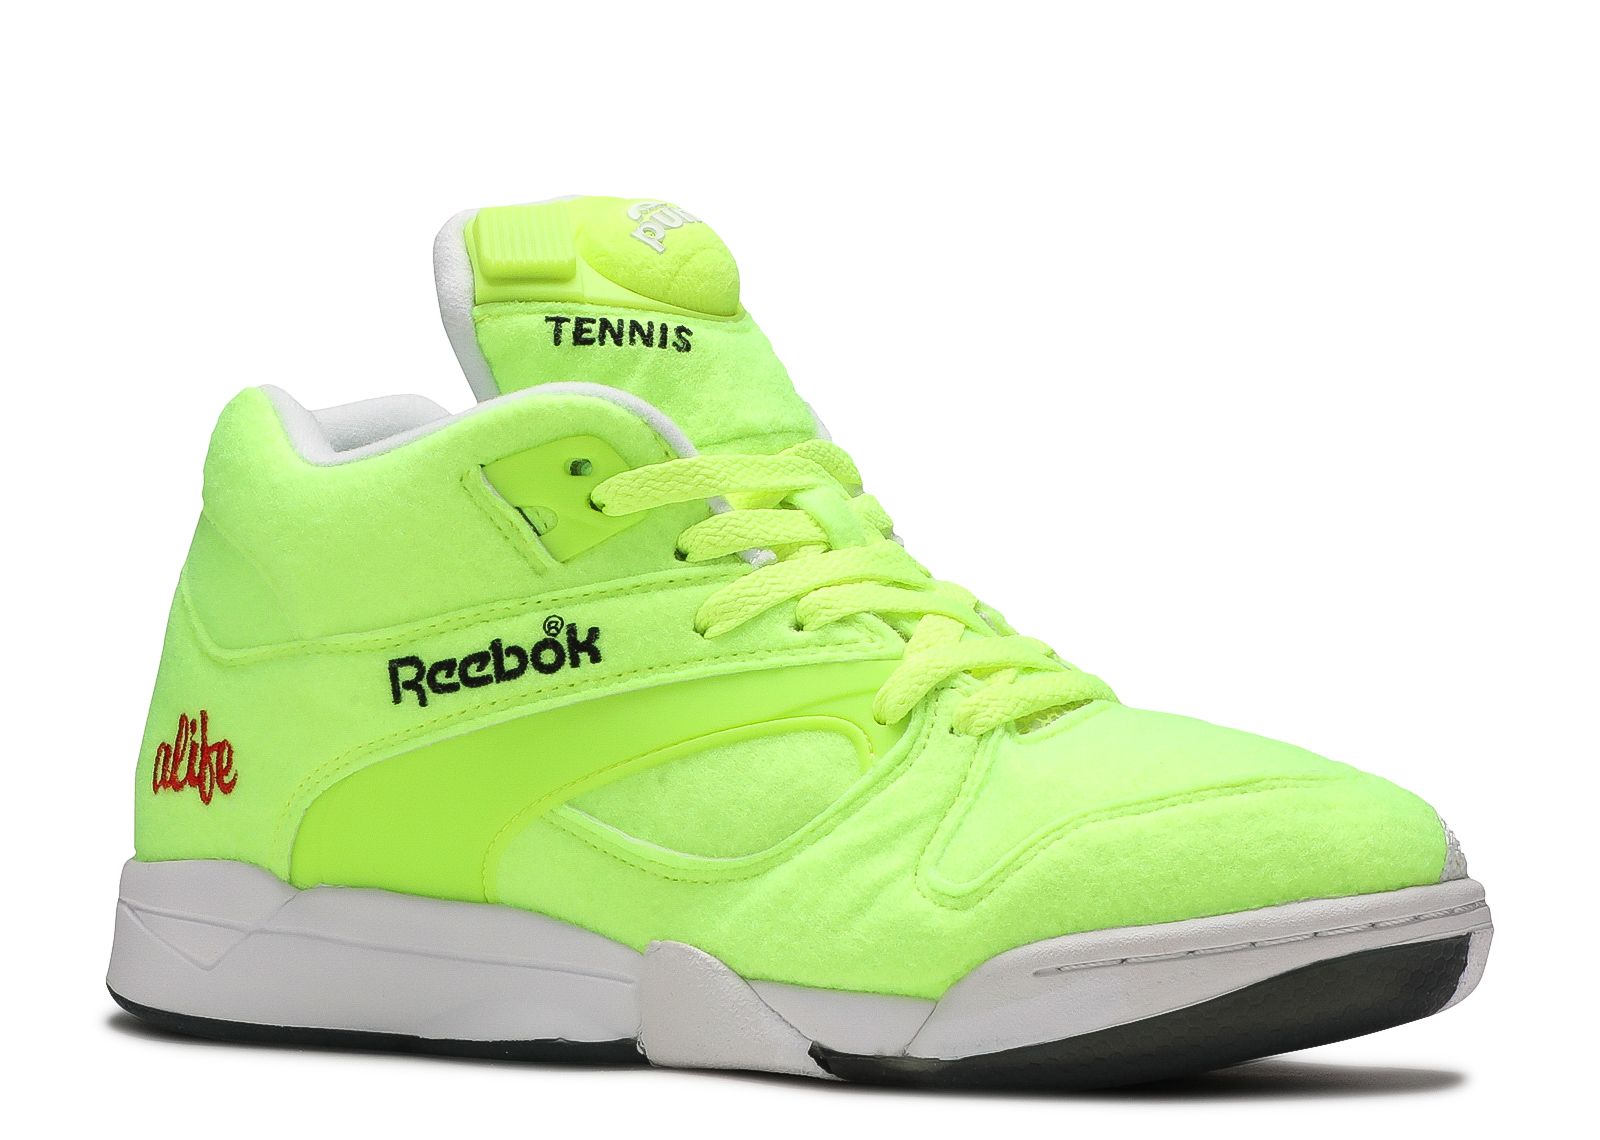 50€ reebok tennis ball shoes - Achat 